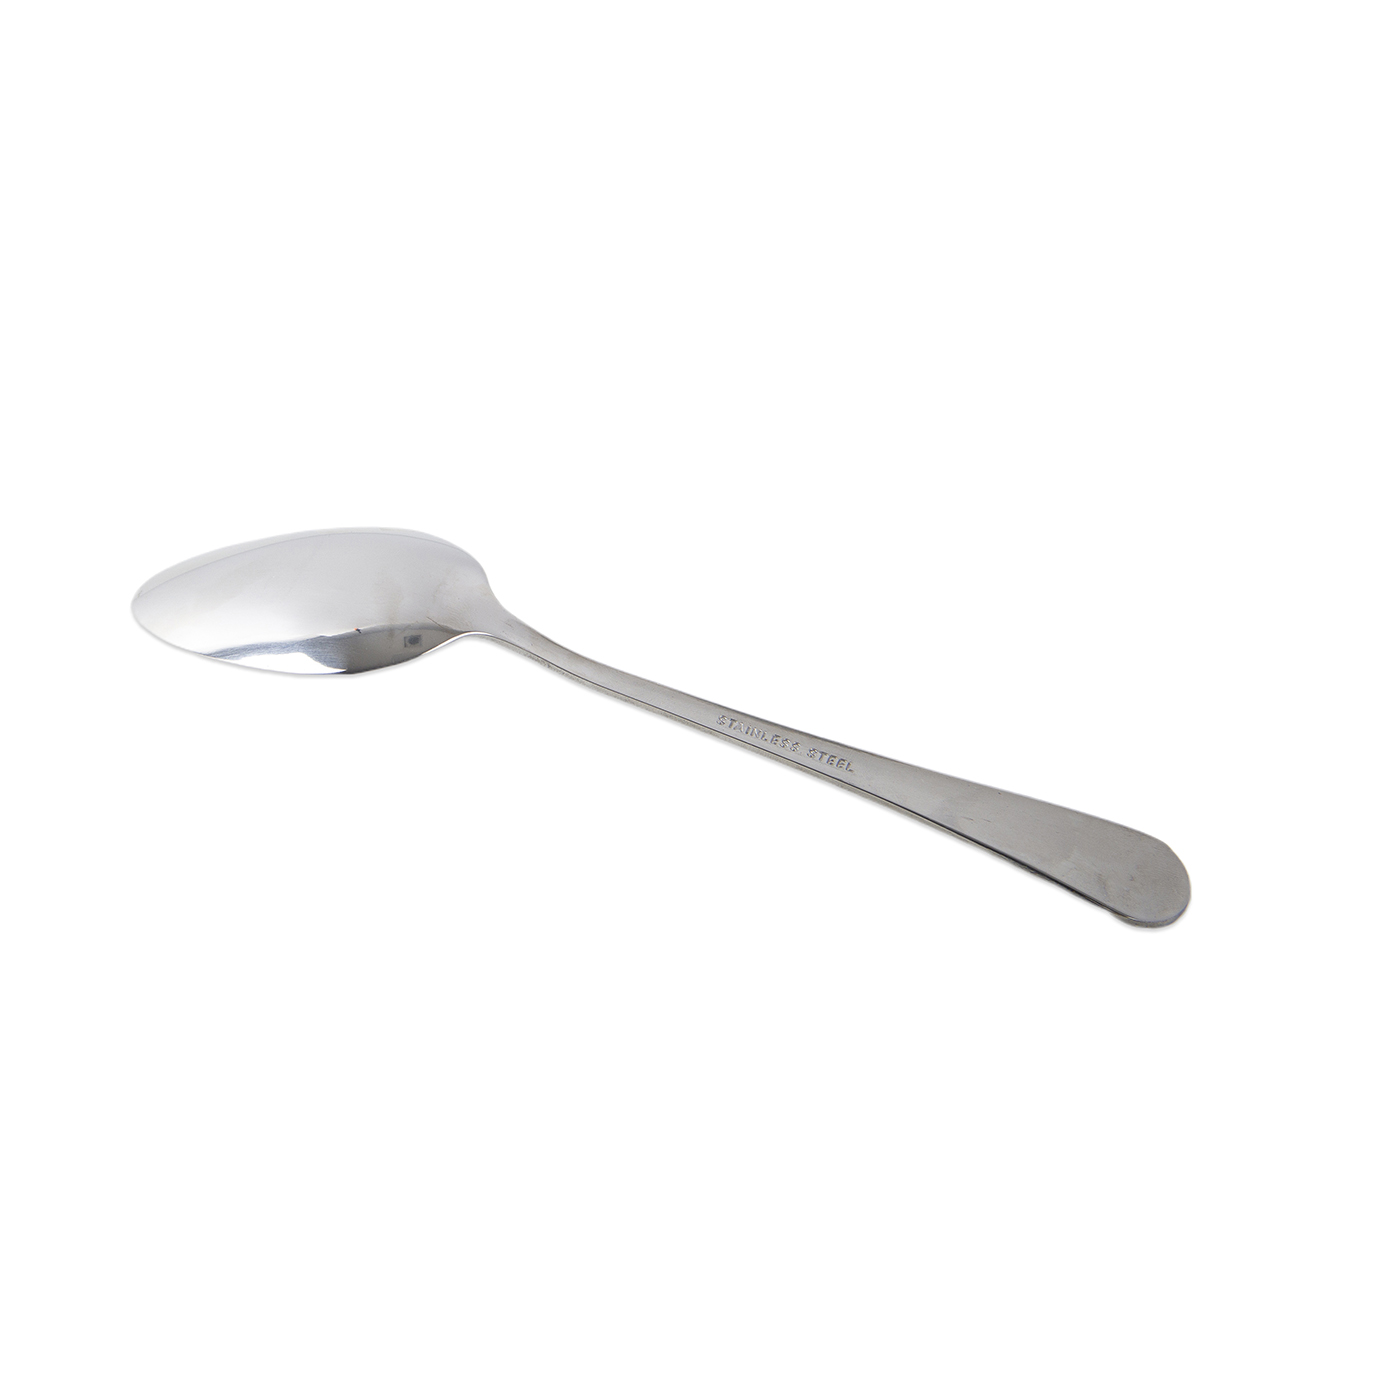 Stainless Steel Small Tea Spoon1